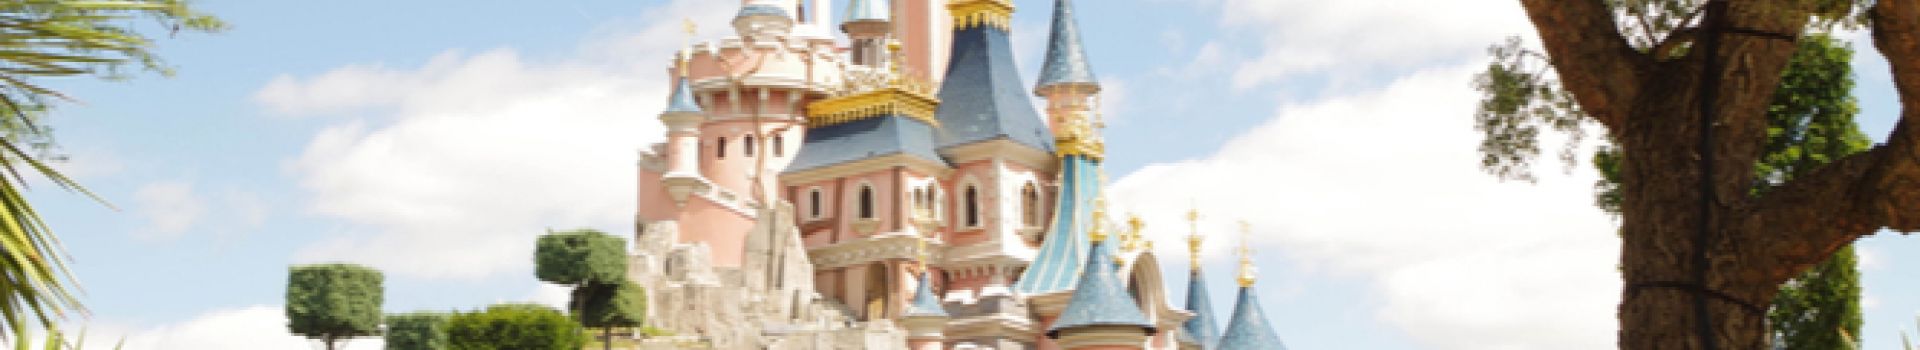 Holidays to Disneyland Paris | Book Flights, Hotel & Tickets | Cassidy Travel